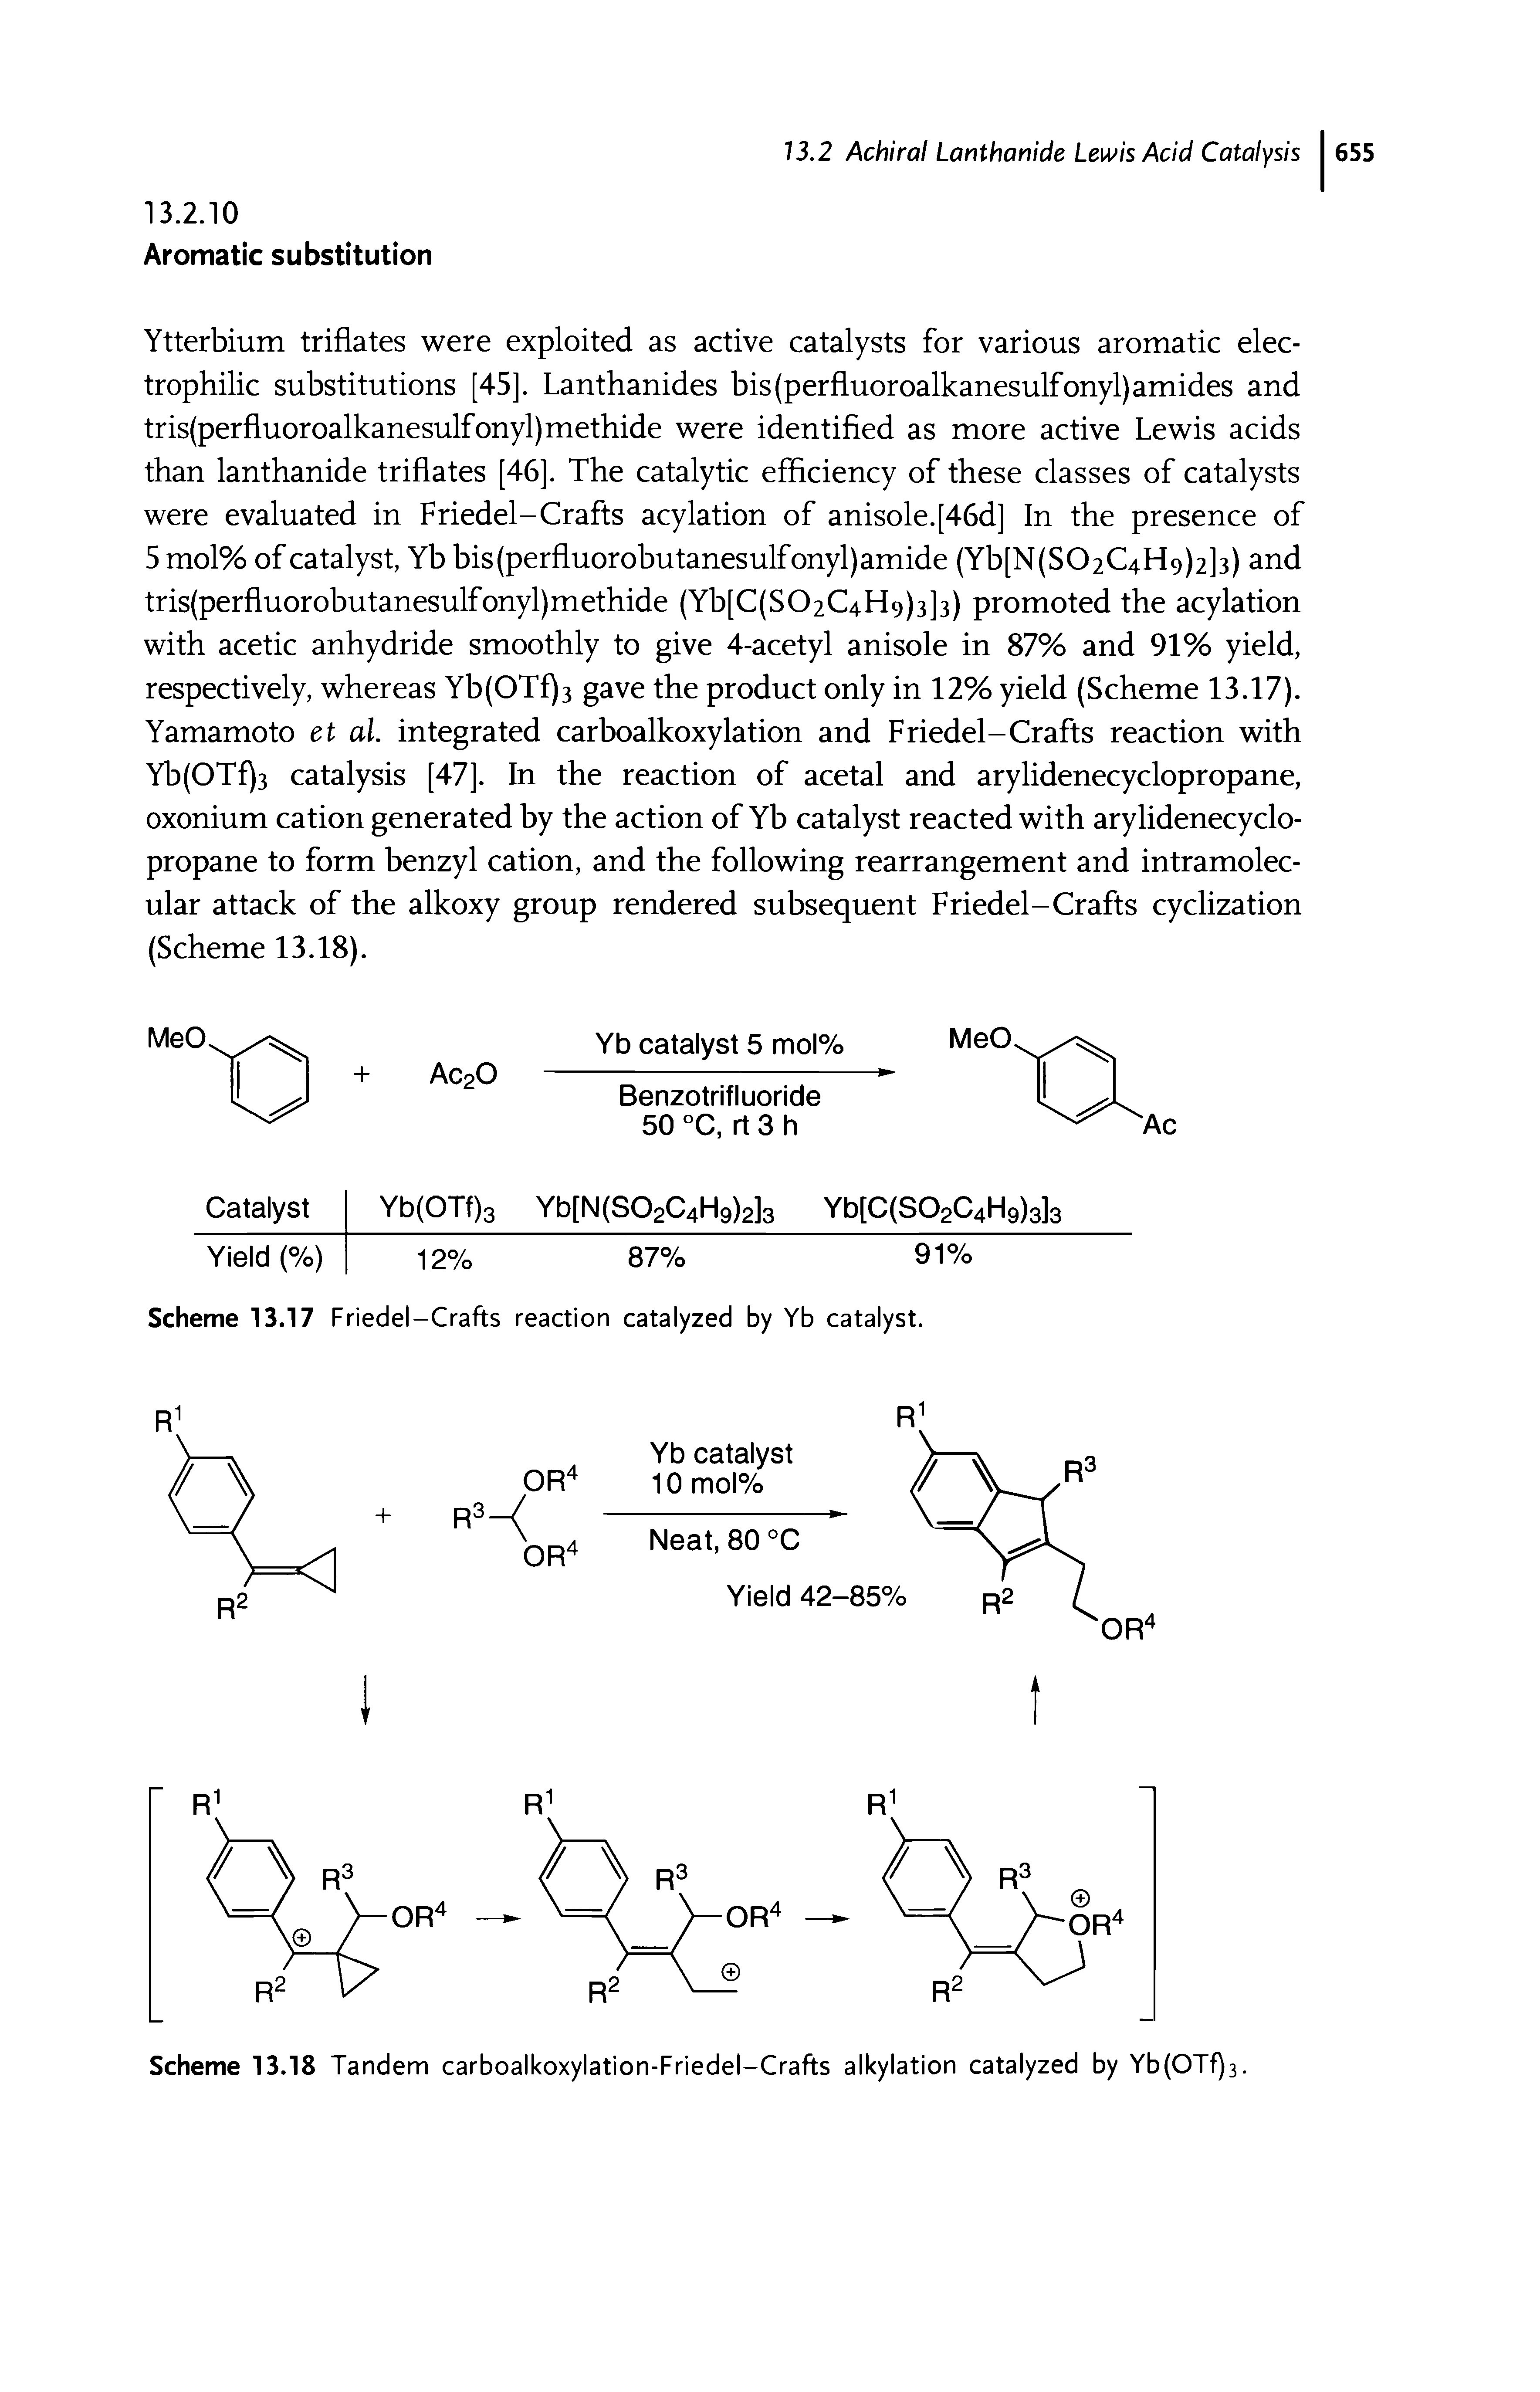 Scheme 13.17 Fried el-Crafts reaction catalyzed by Yb catalyst.